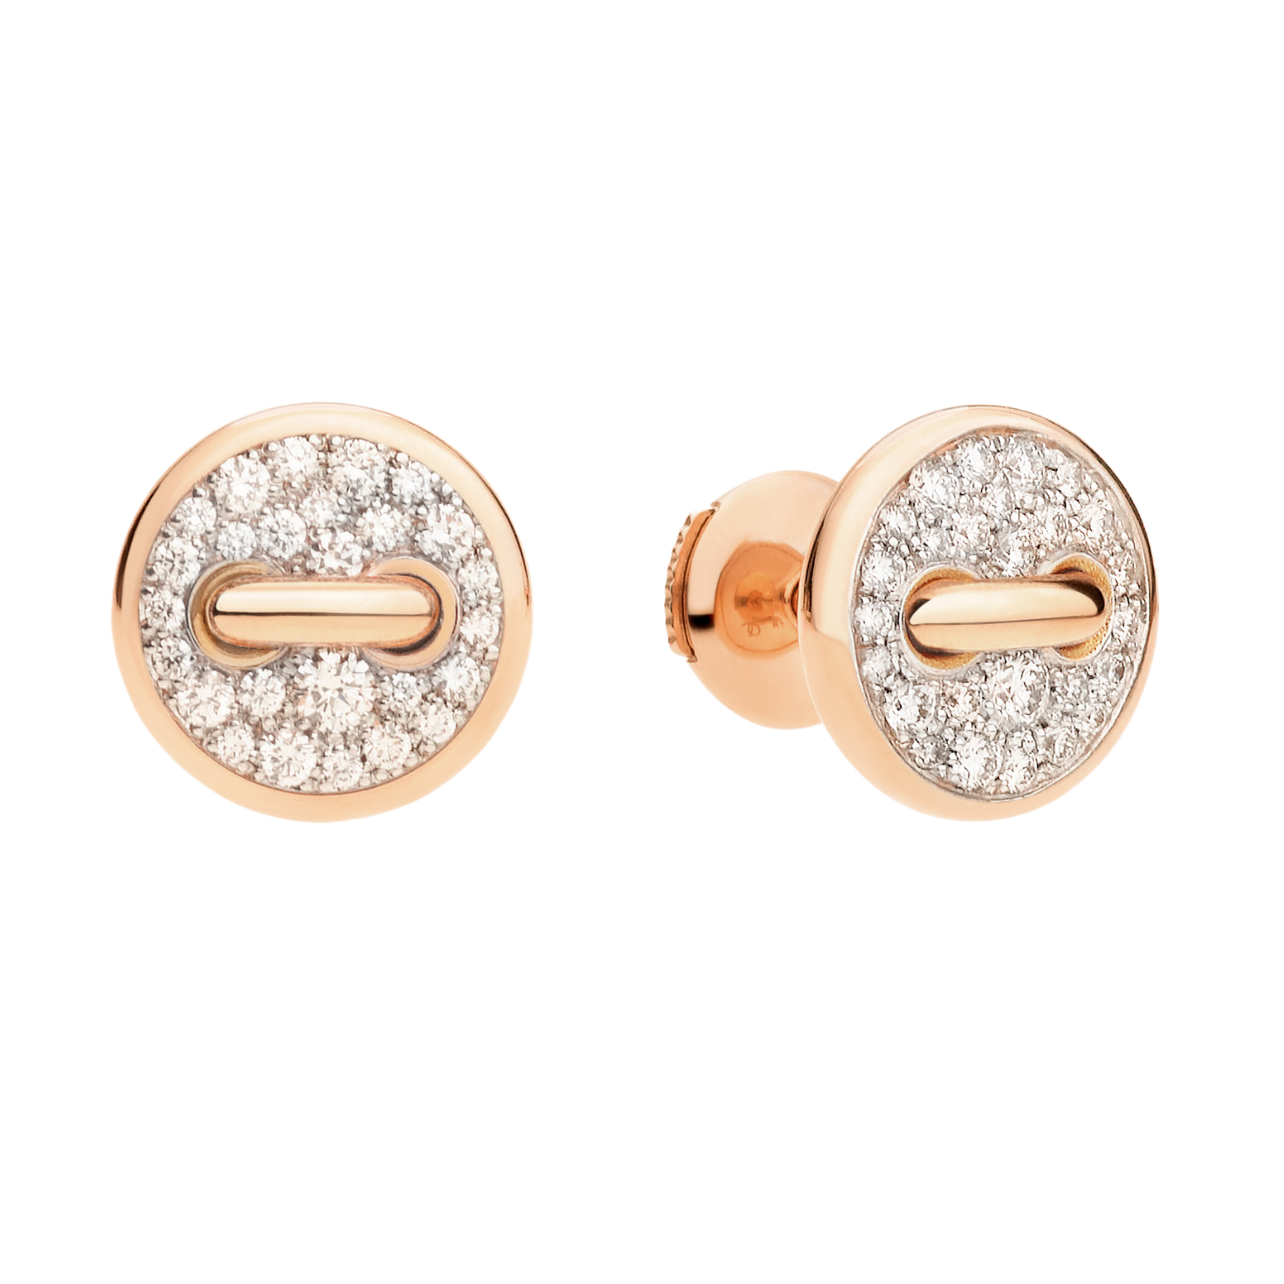 Pomellato diamond earrings from Pom Pom Dot collection in rose gold